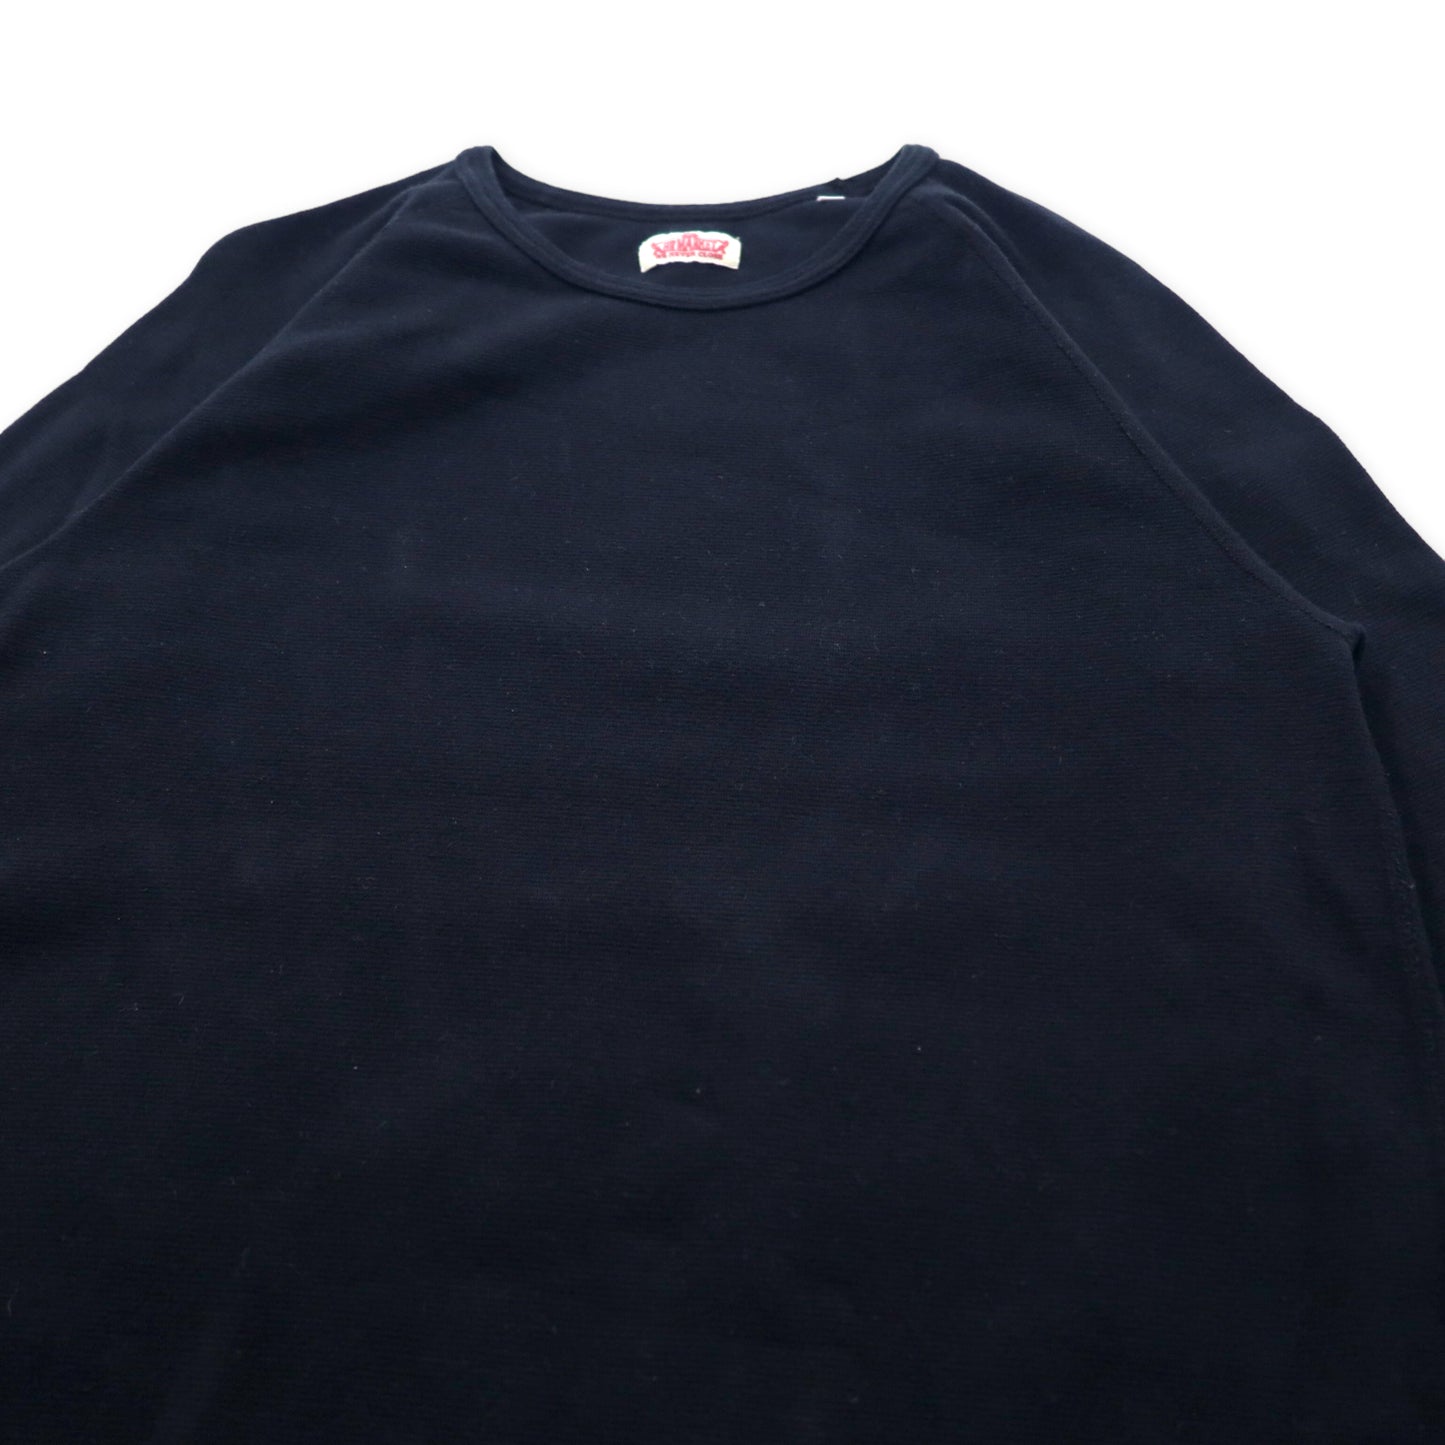 H.R.MARKET ロングスリーブ Tシャツ 5 ブラック コットン 日本製